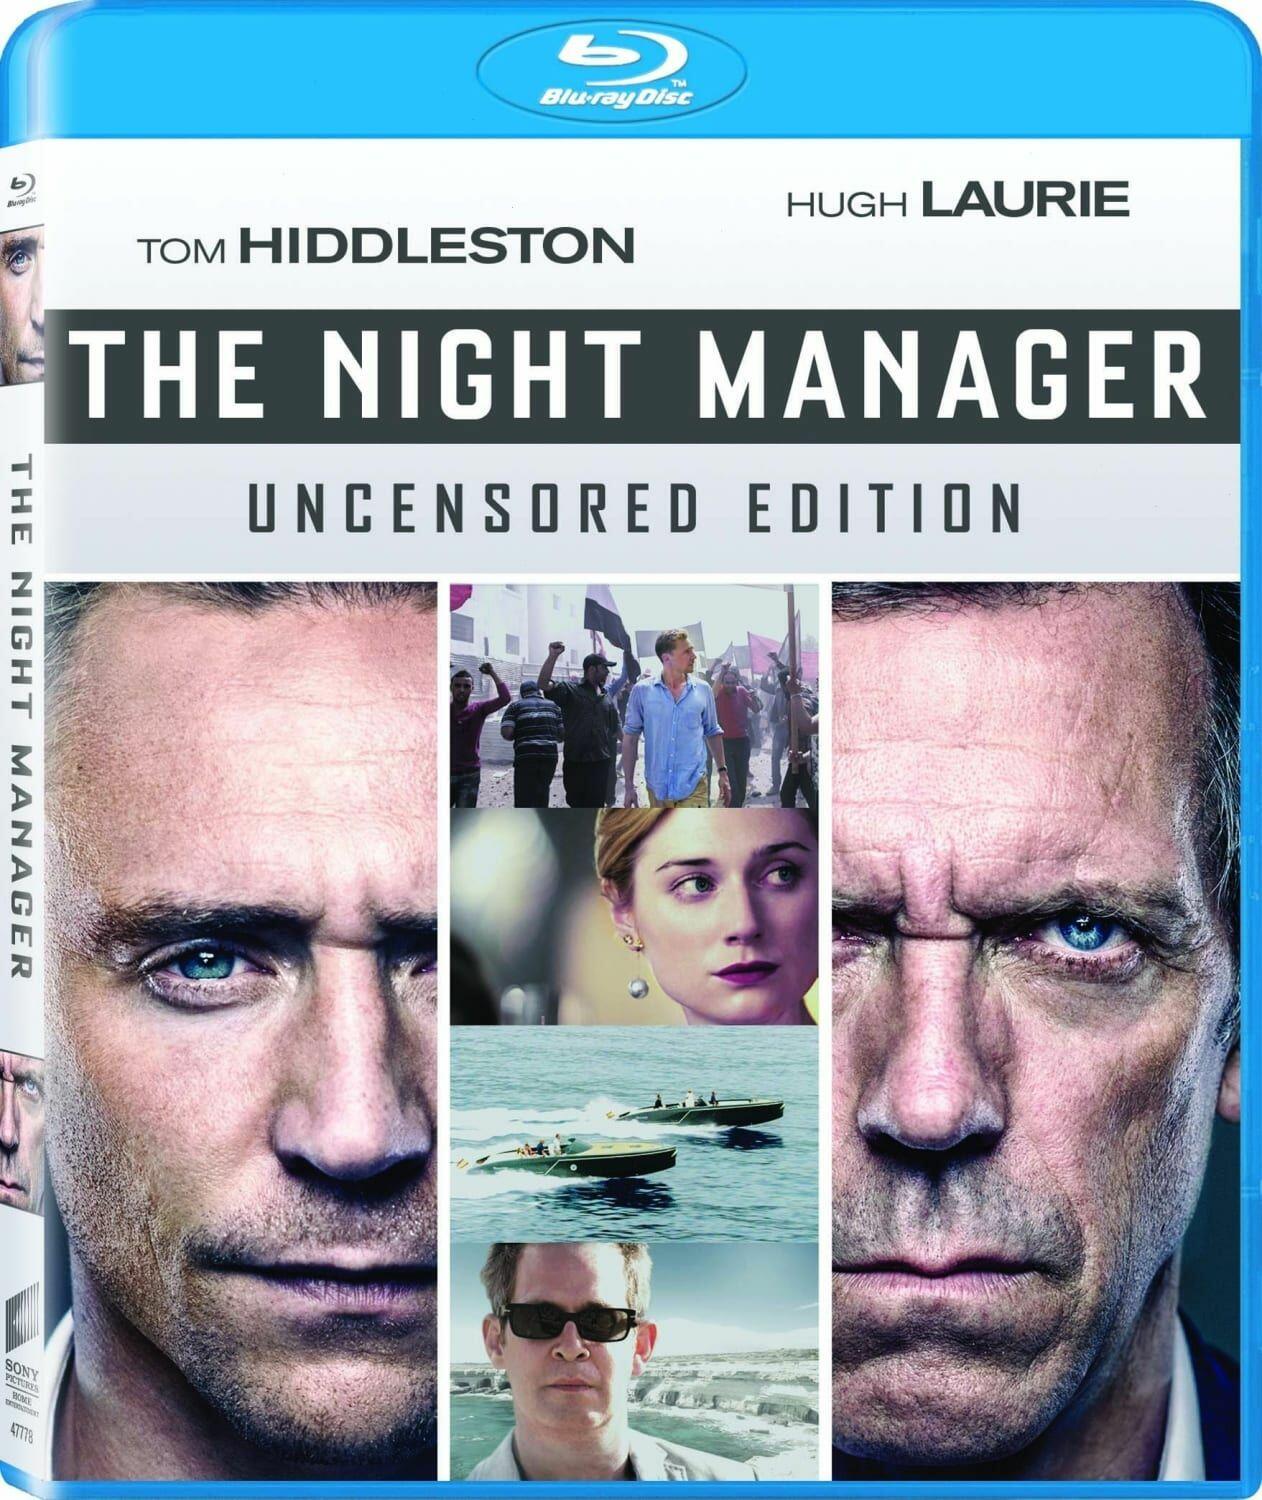 The Night Manager: Season 1 (Blu-ray / Digital Copy) on MovieShack